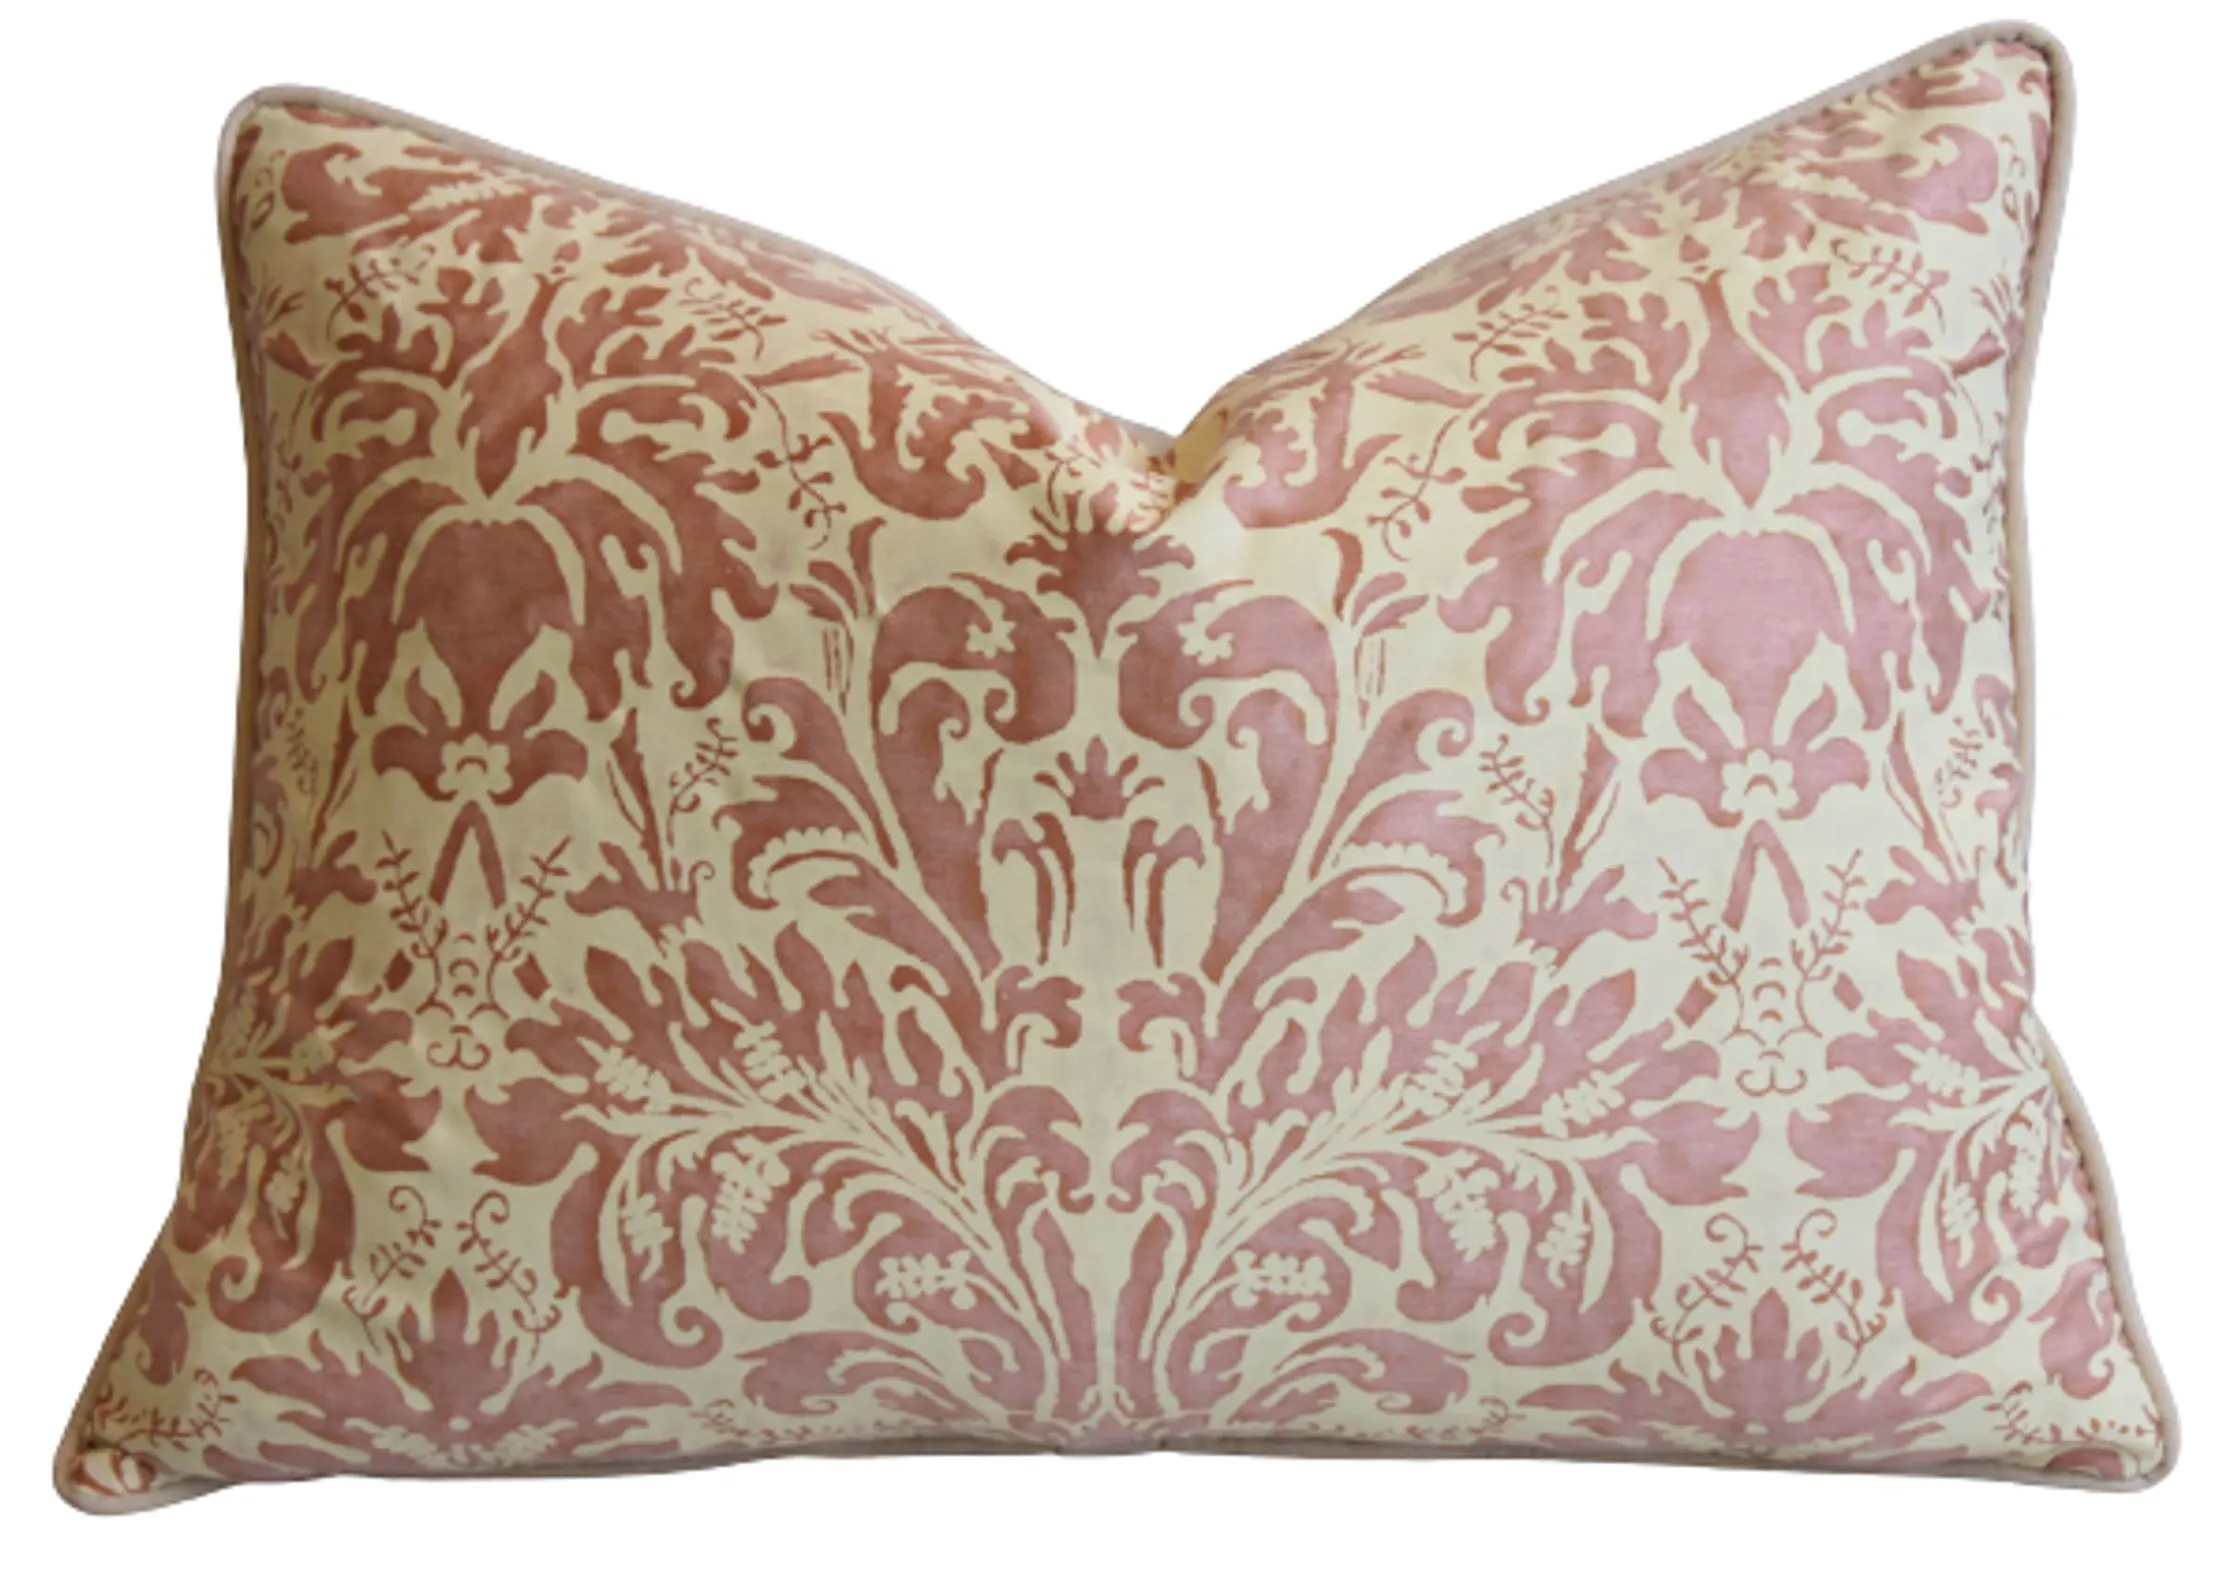 Mariano Fortuny Lucrezia Pillows - Set of 2